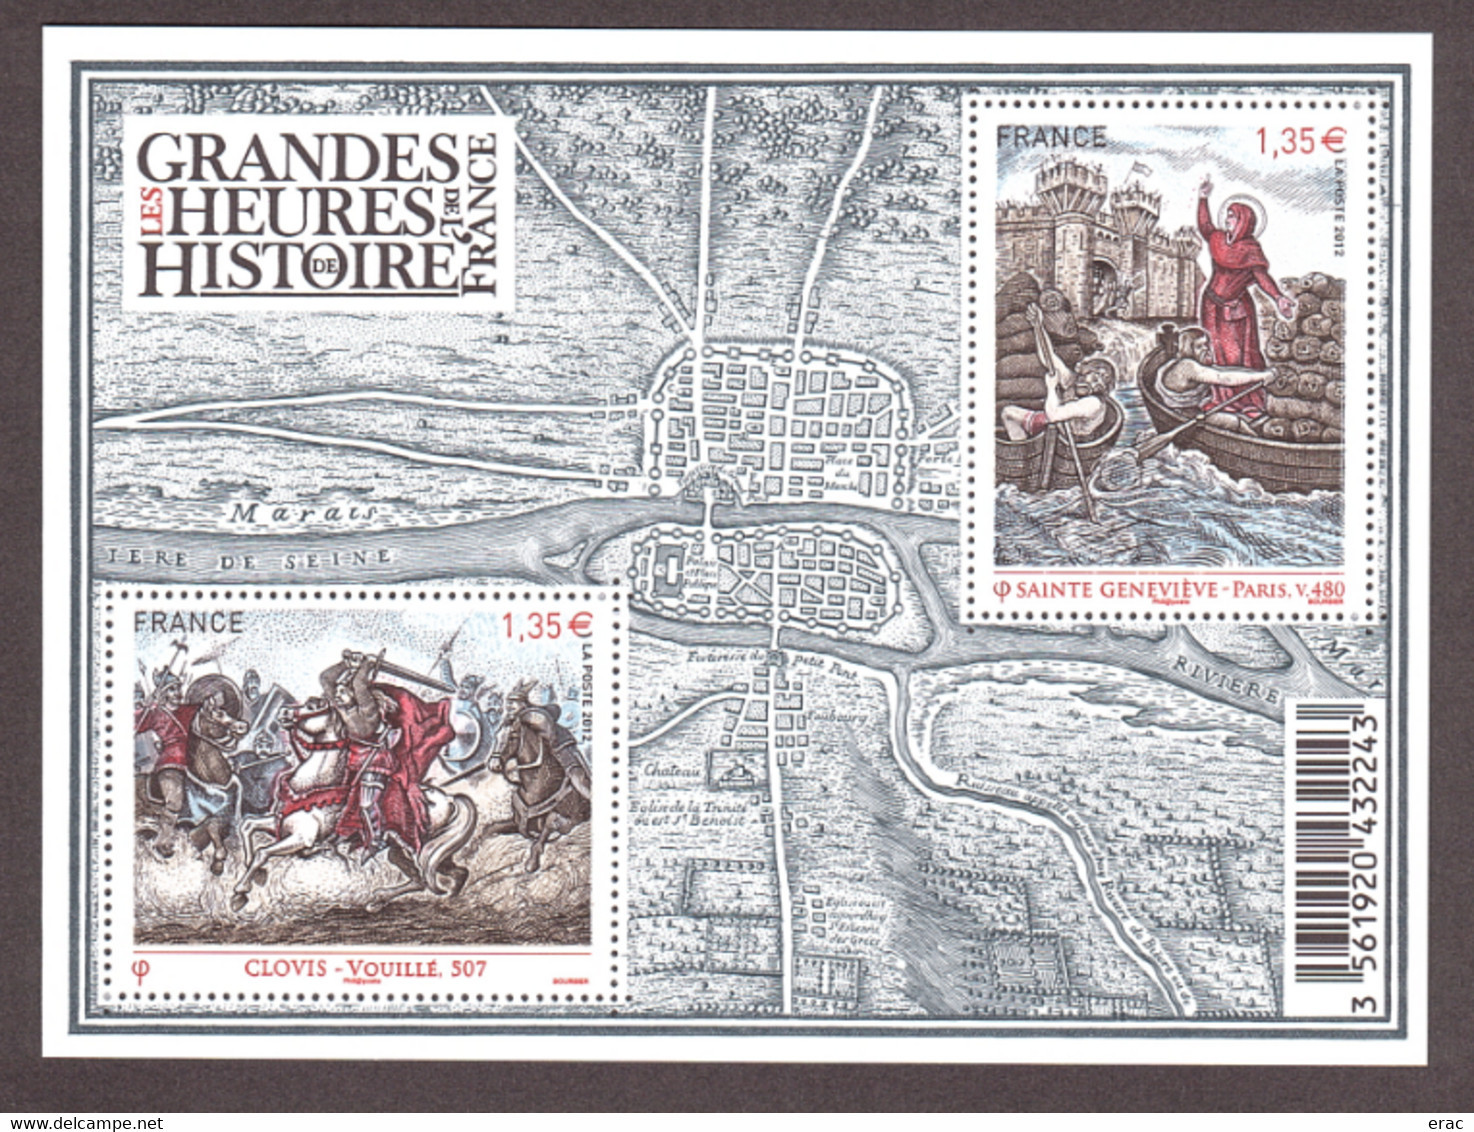 France - 2012 - Feuillet F4704 - Neuf ** - Histoire De France N° 1 - Unused Stamps